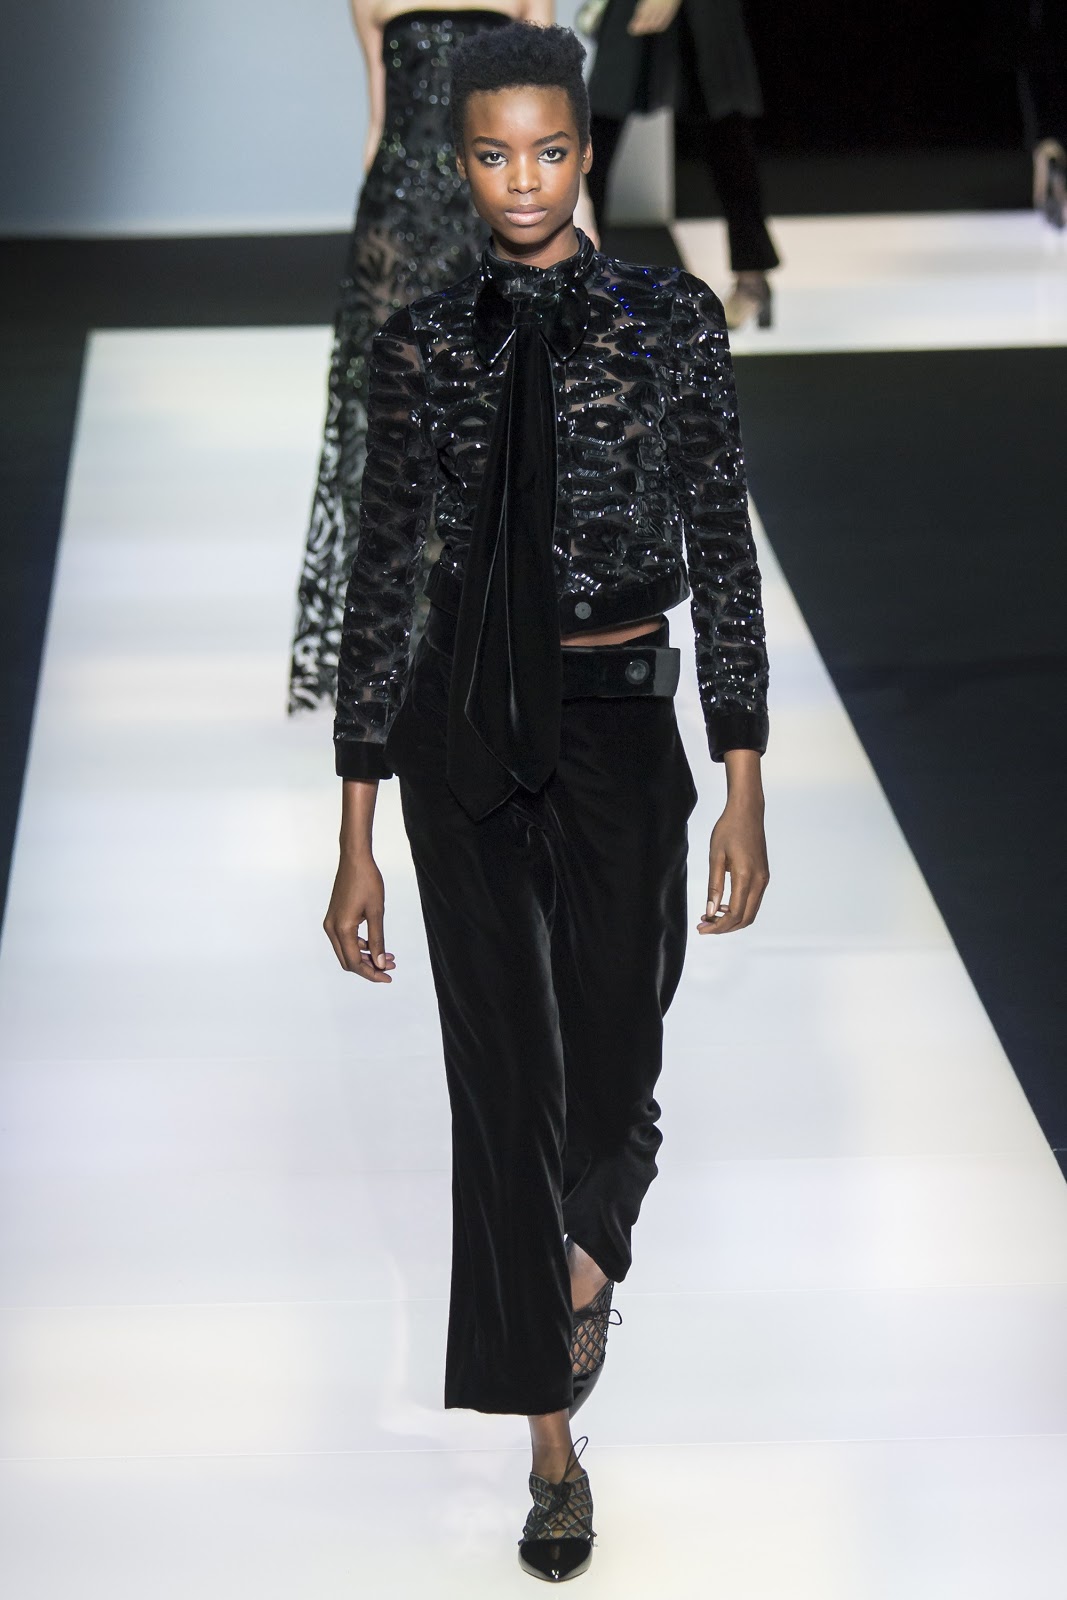 Fashion Runway | 'Black Velvet', the new Giorgio Armani Women’s Fall ...